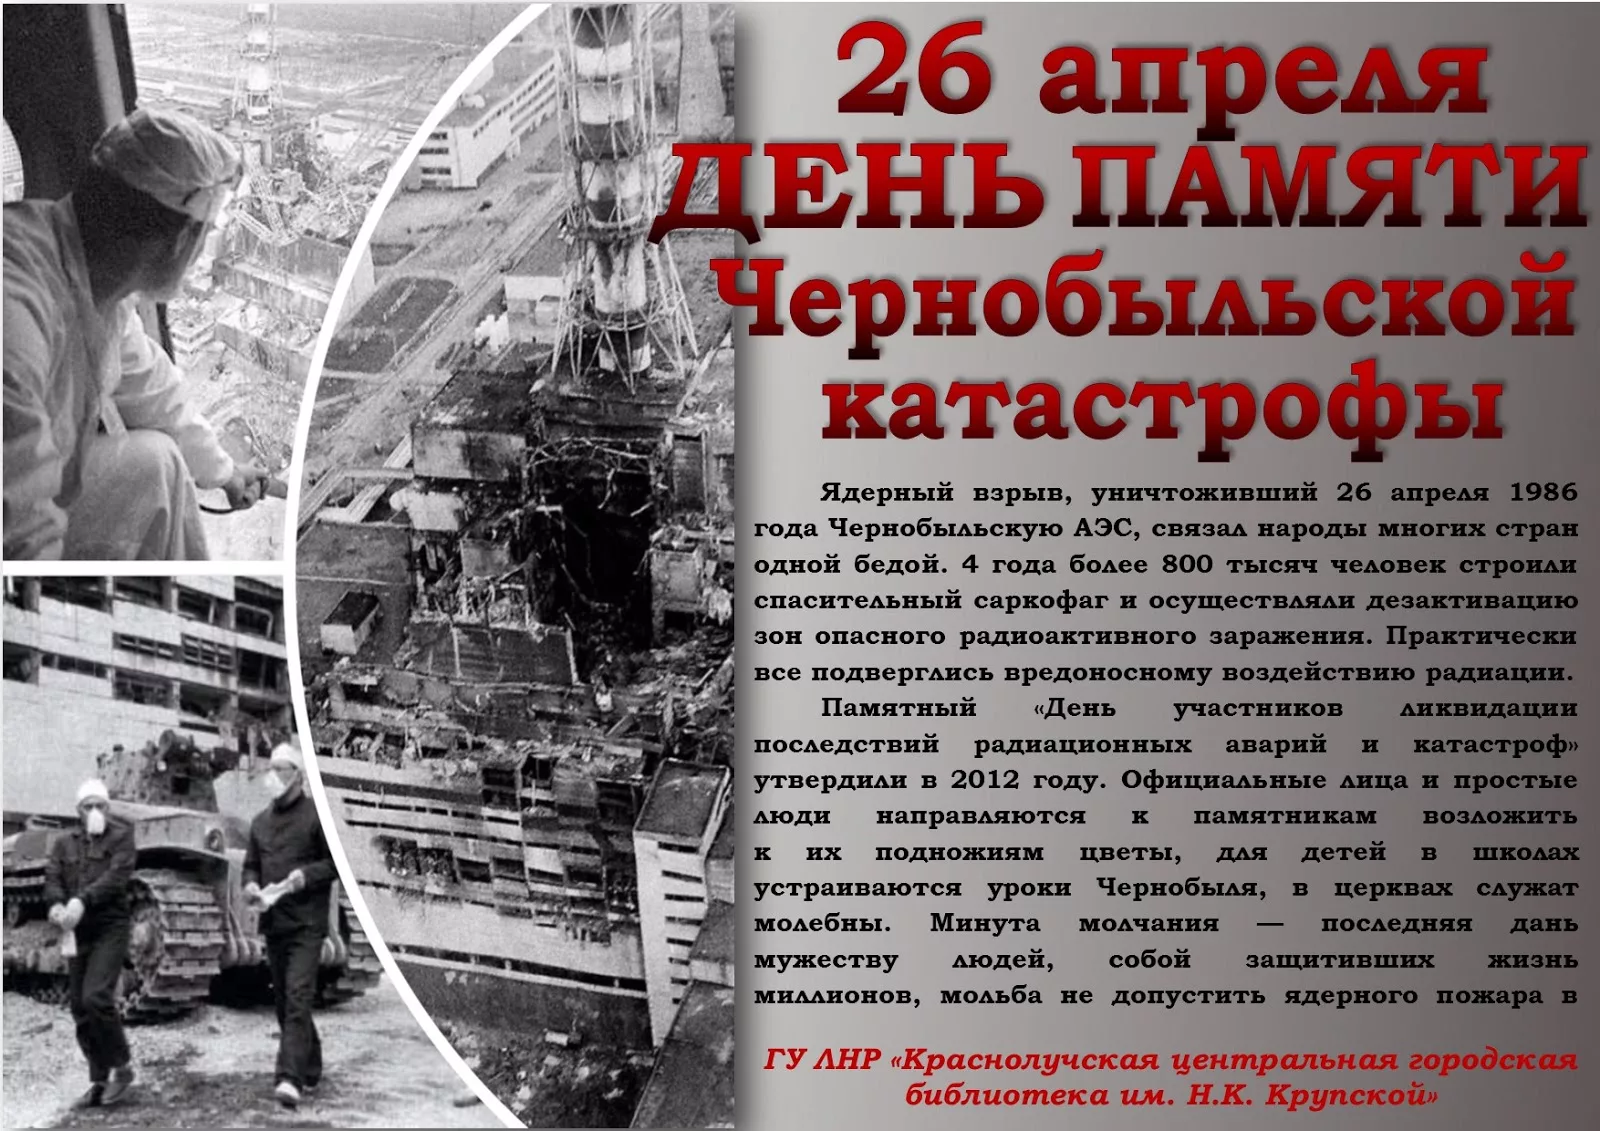 ЧАЭС 1986 26 апреля. Чернобыльская катастрофа - 26 апреля 1986 г.. 26 Апреля день памяти Чернобыльской трагедии. 26 Апреля Чернобыль. Чернобыль час памяти